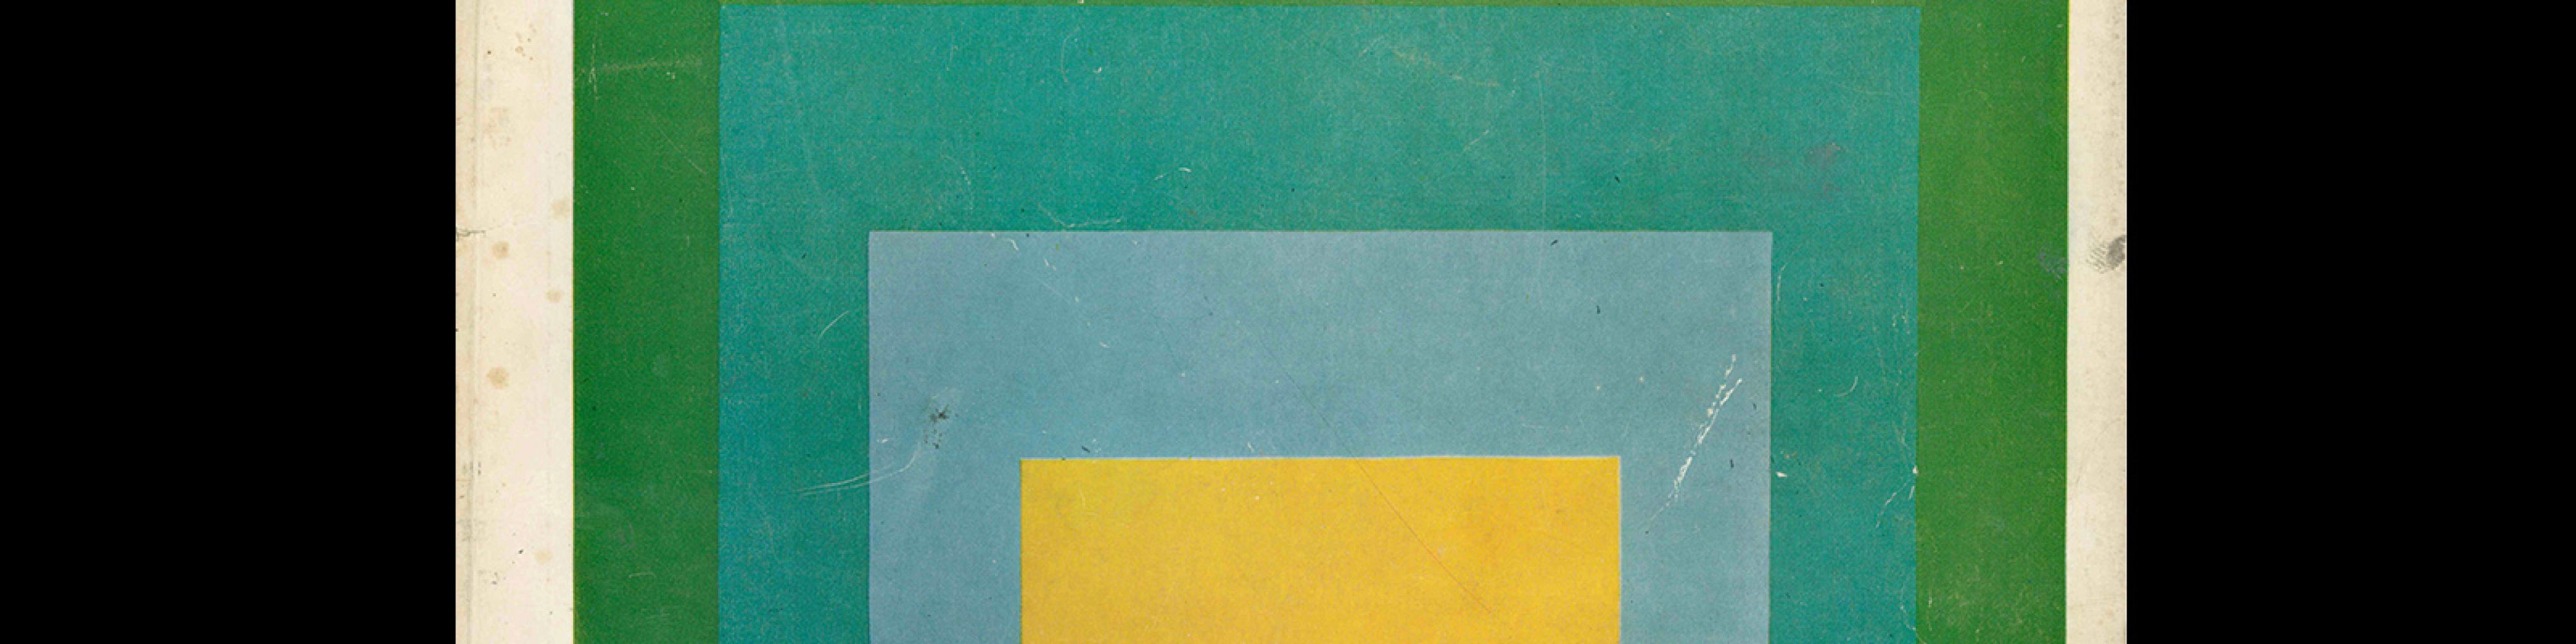 Studio International, February 1964. Cover artwork by Josef Albers